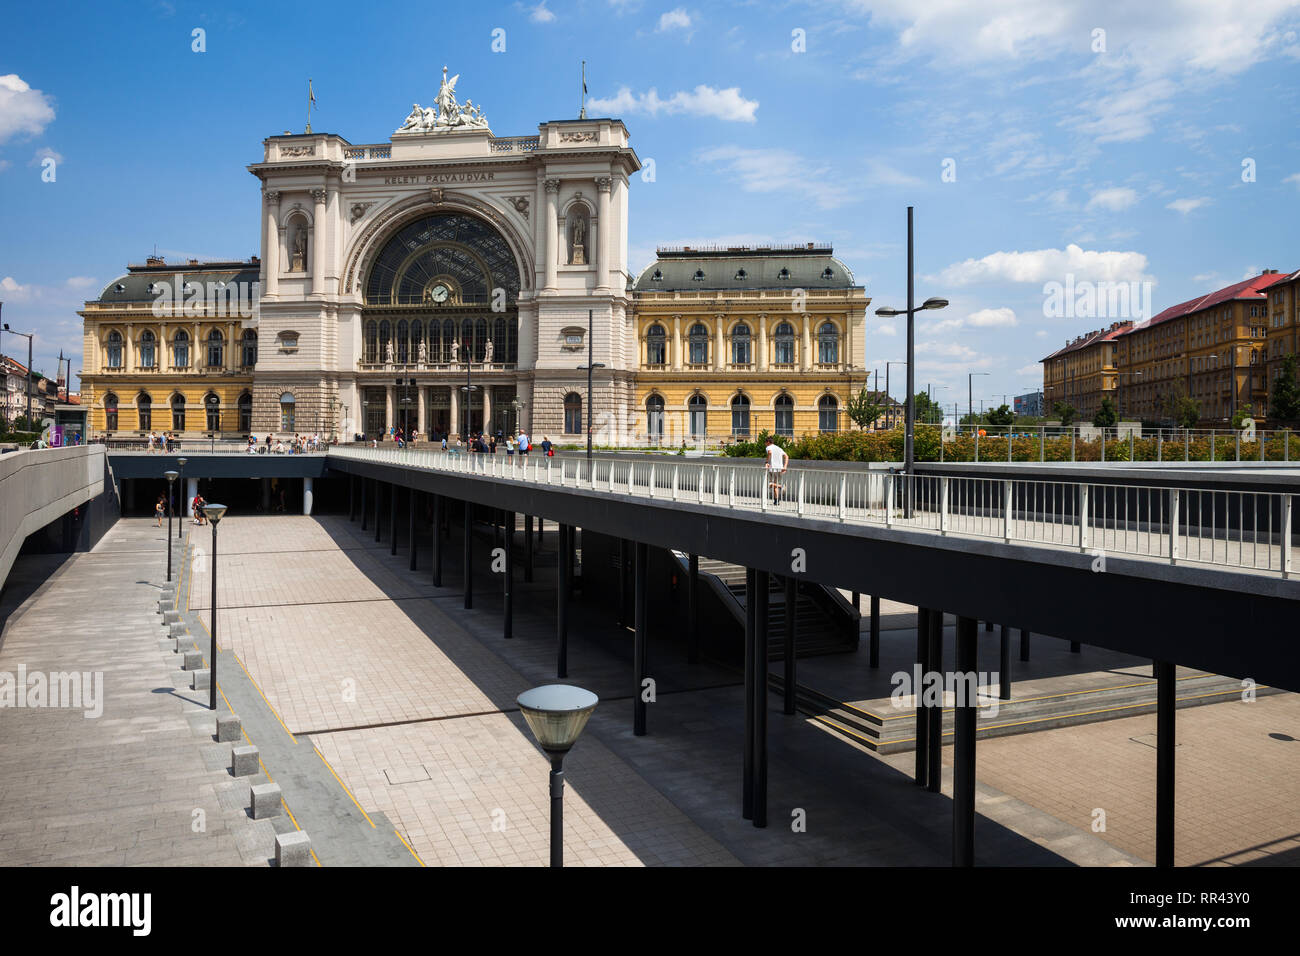 Hungary, Budapest, Keleti Railway Station, eclectic style 19th century building, city landmark Stock Photo